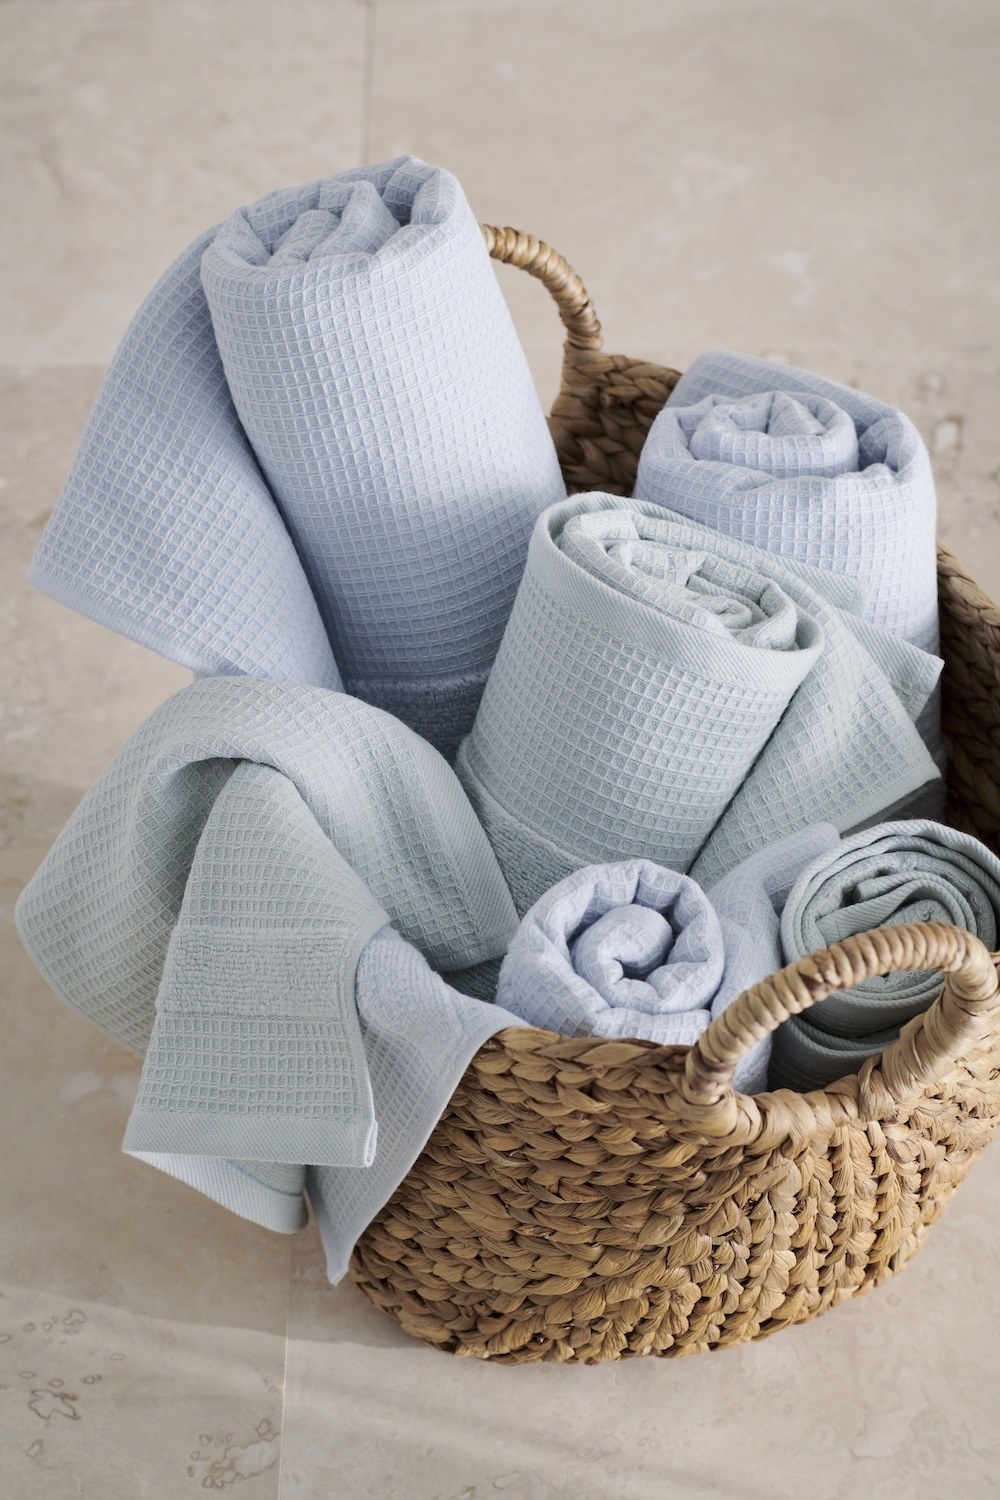 A basket of blue waffle towels